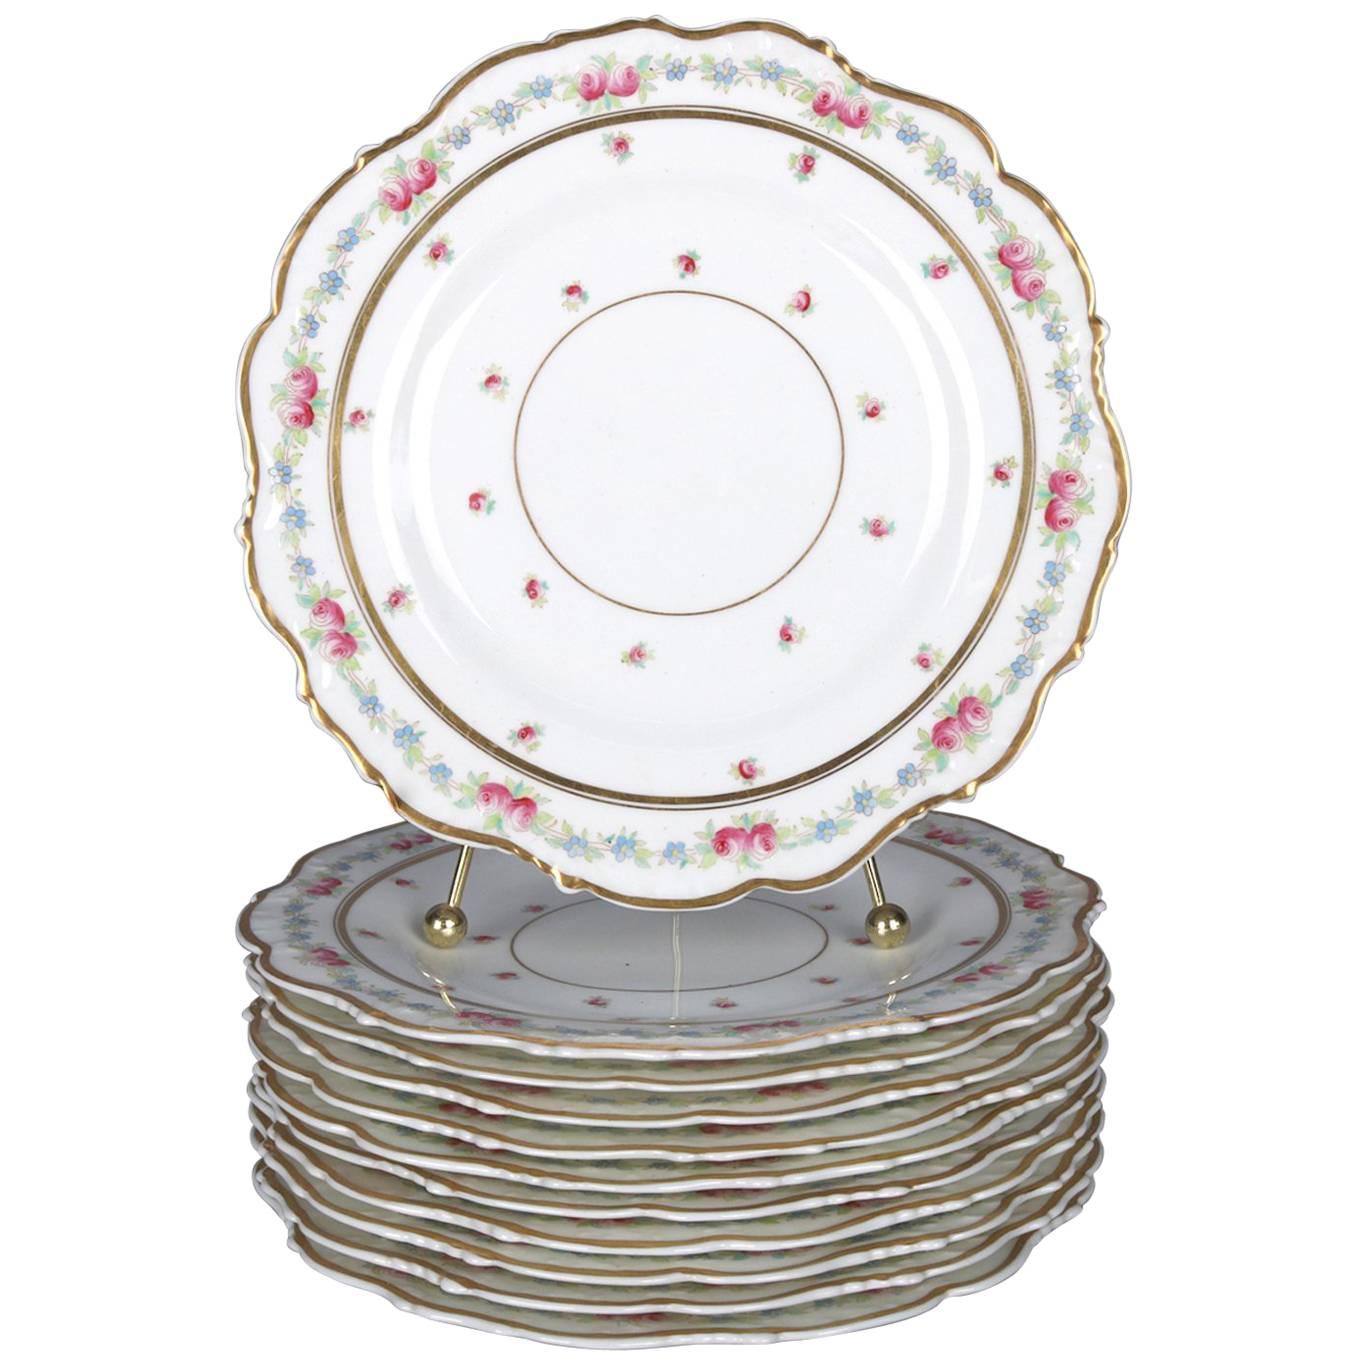 11 Antique English Cauldon Hand-Painted Floral and Gilt Porcelain Plates